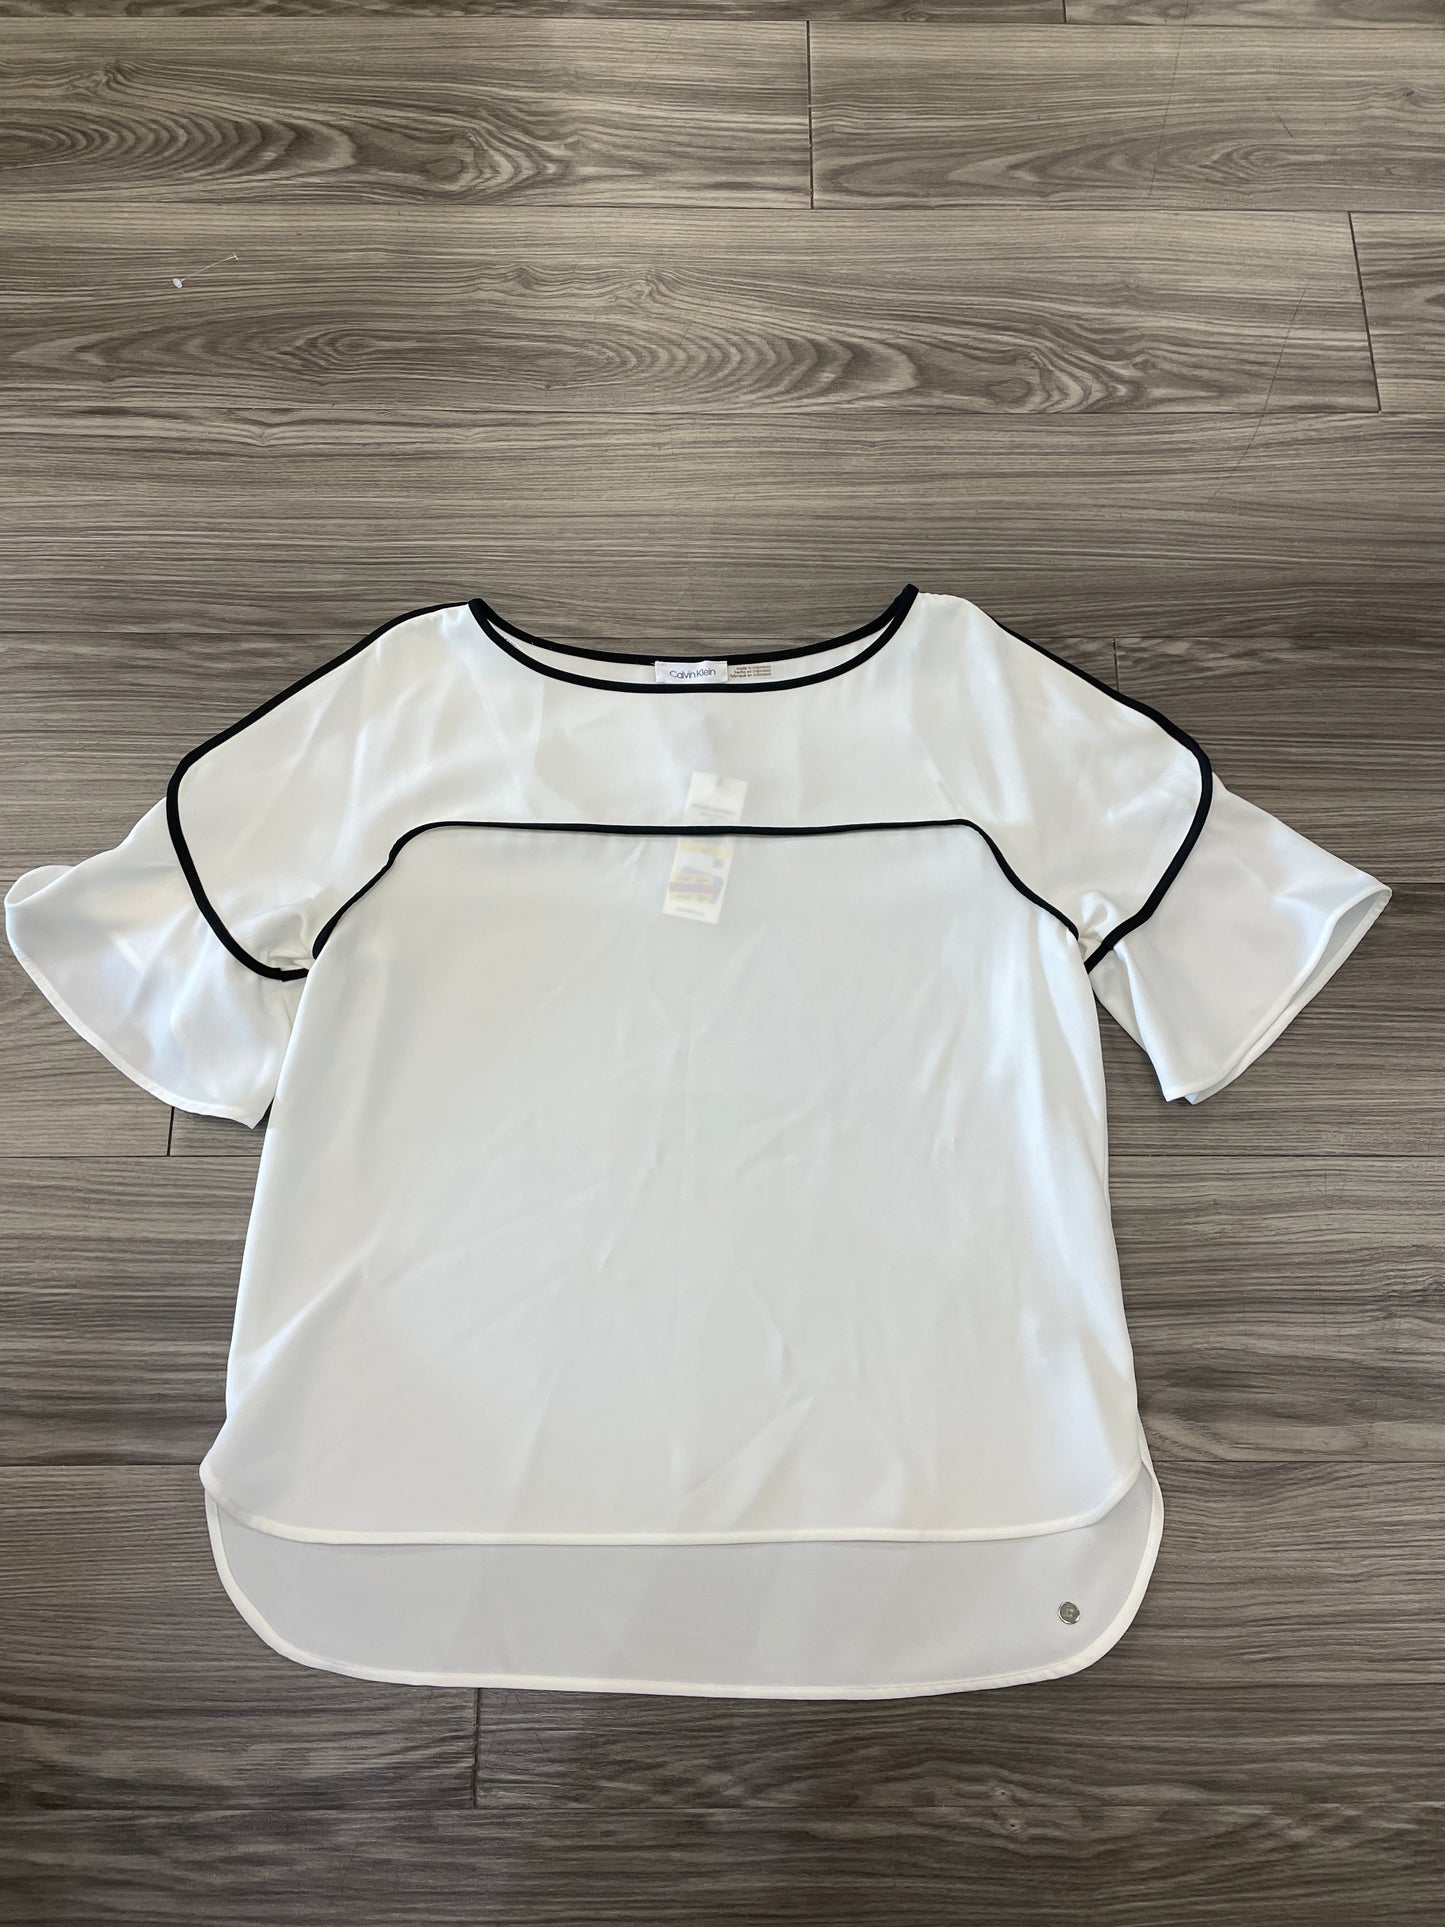 White Top Short Sleeve Calvin Klein, Size M